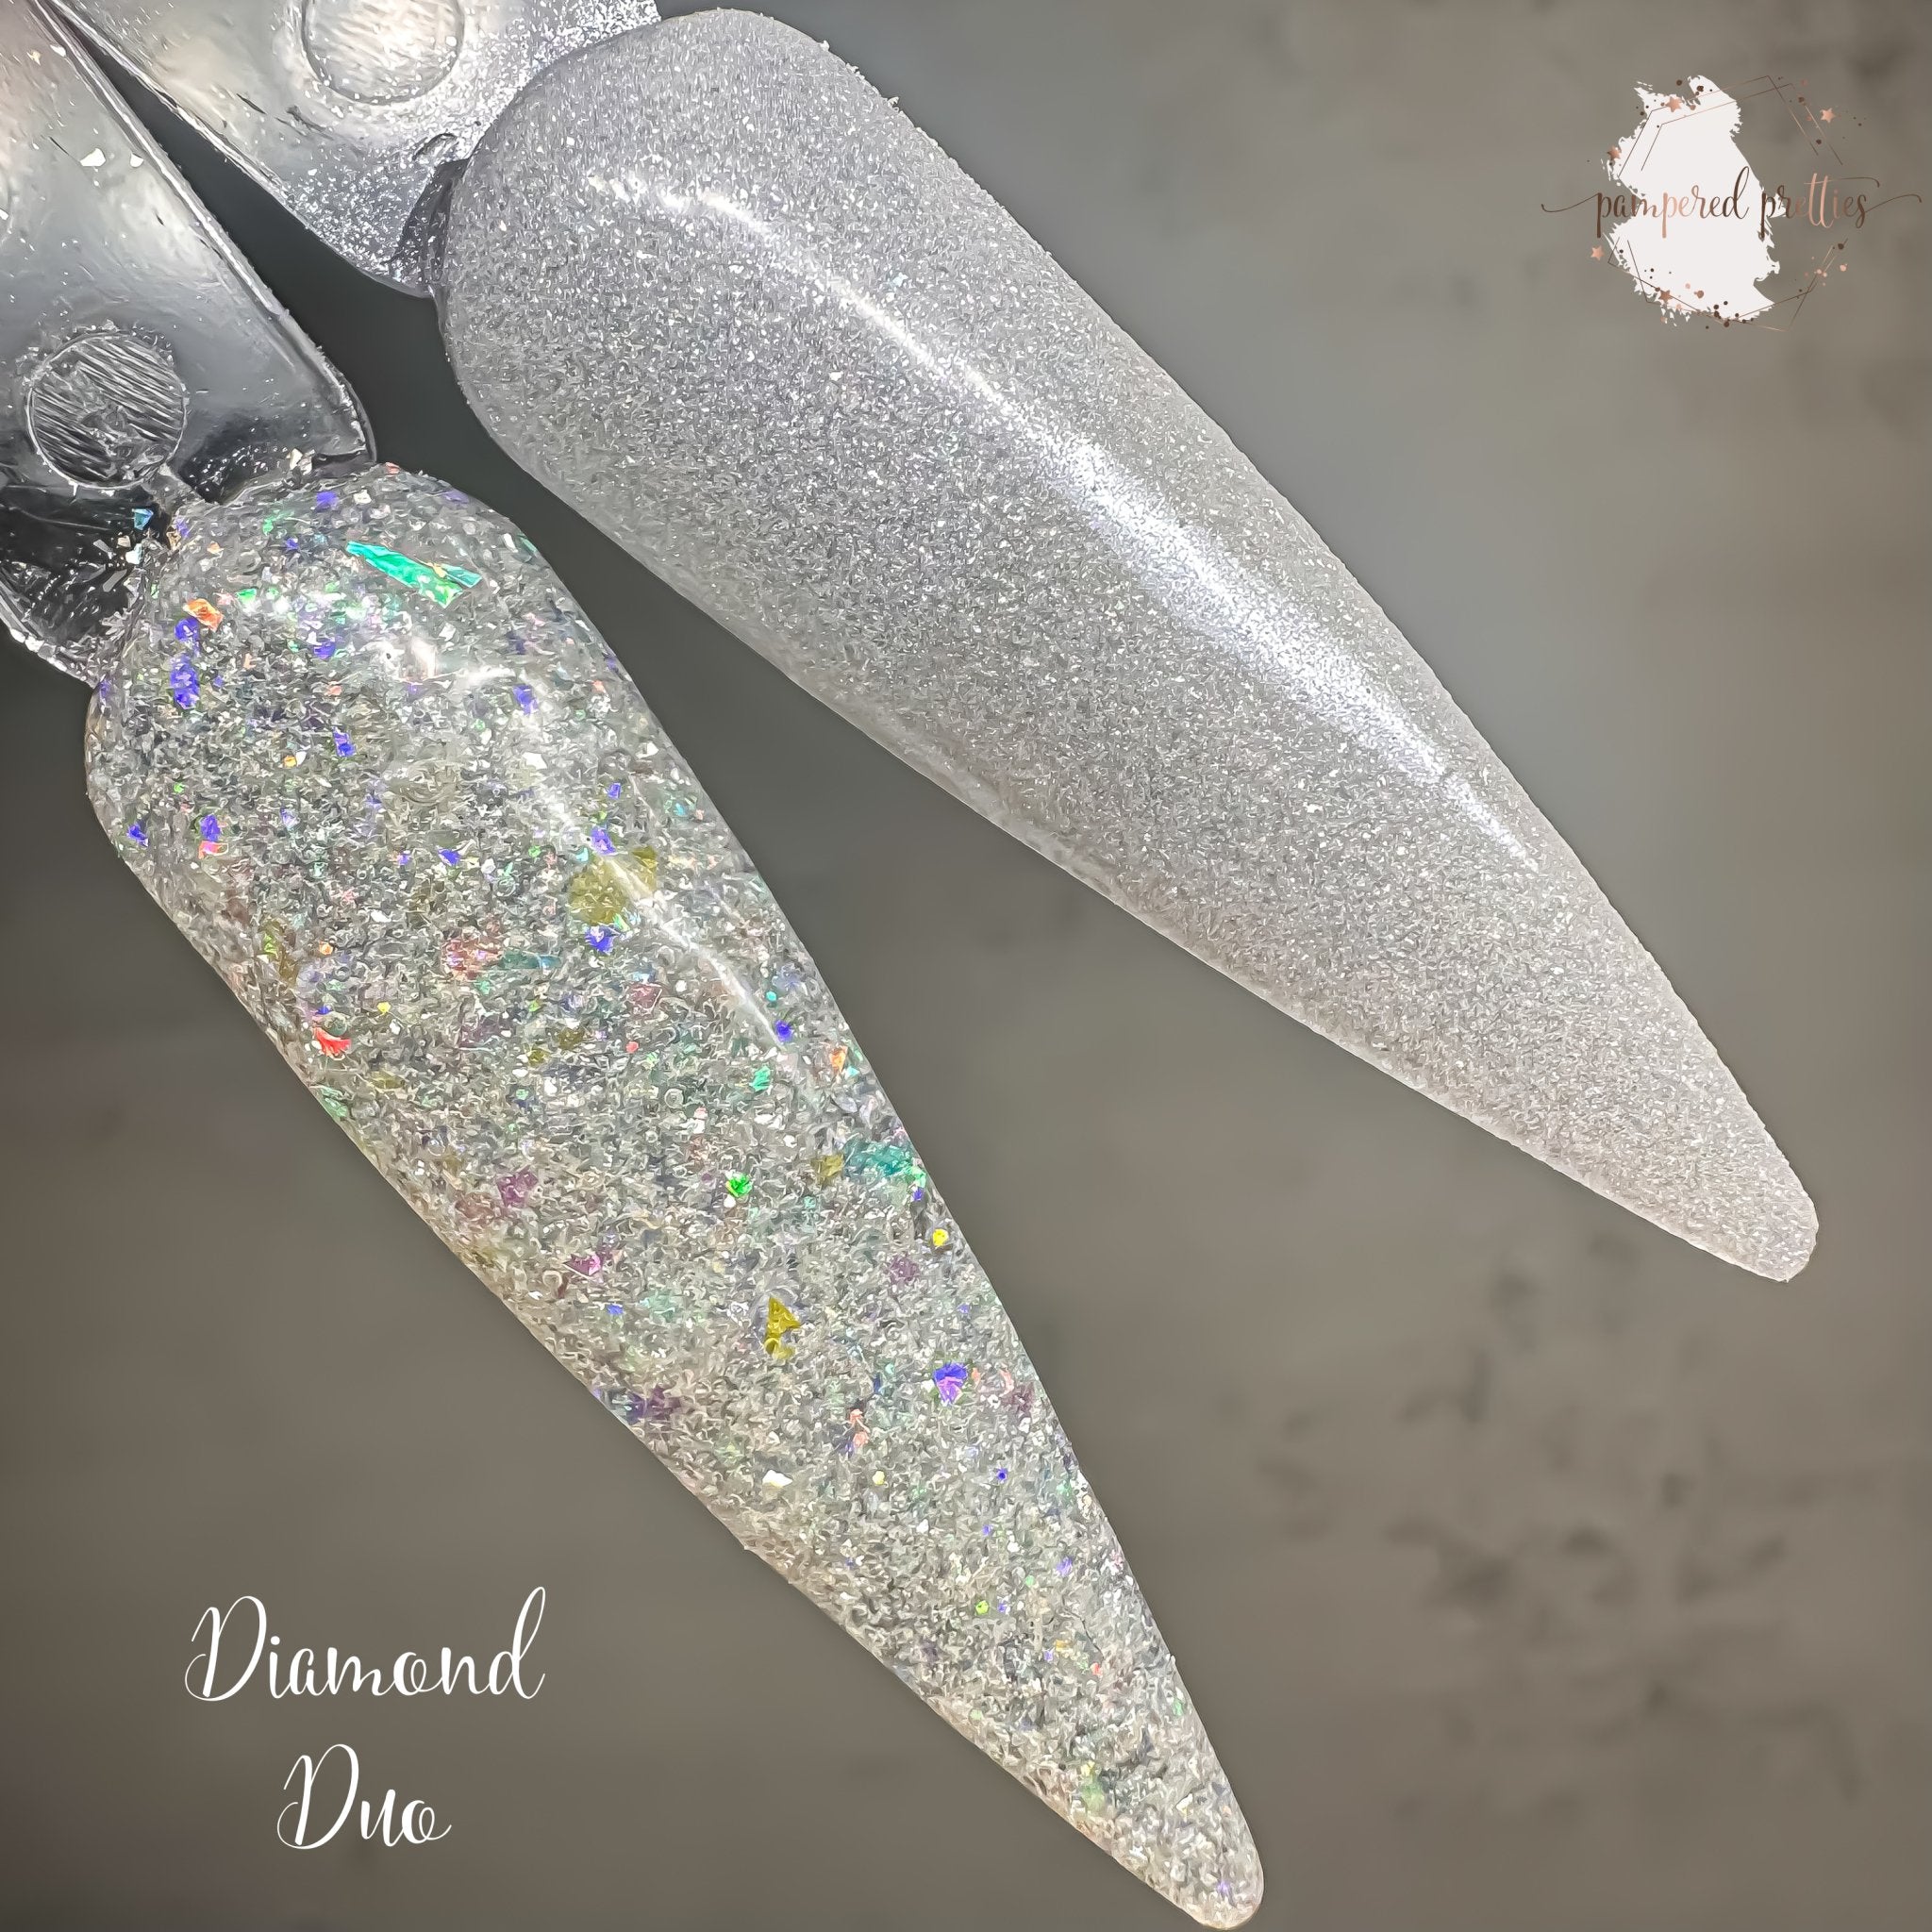 Diamond Duo - Pampered Pretties